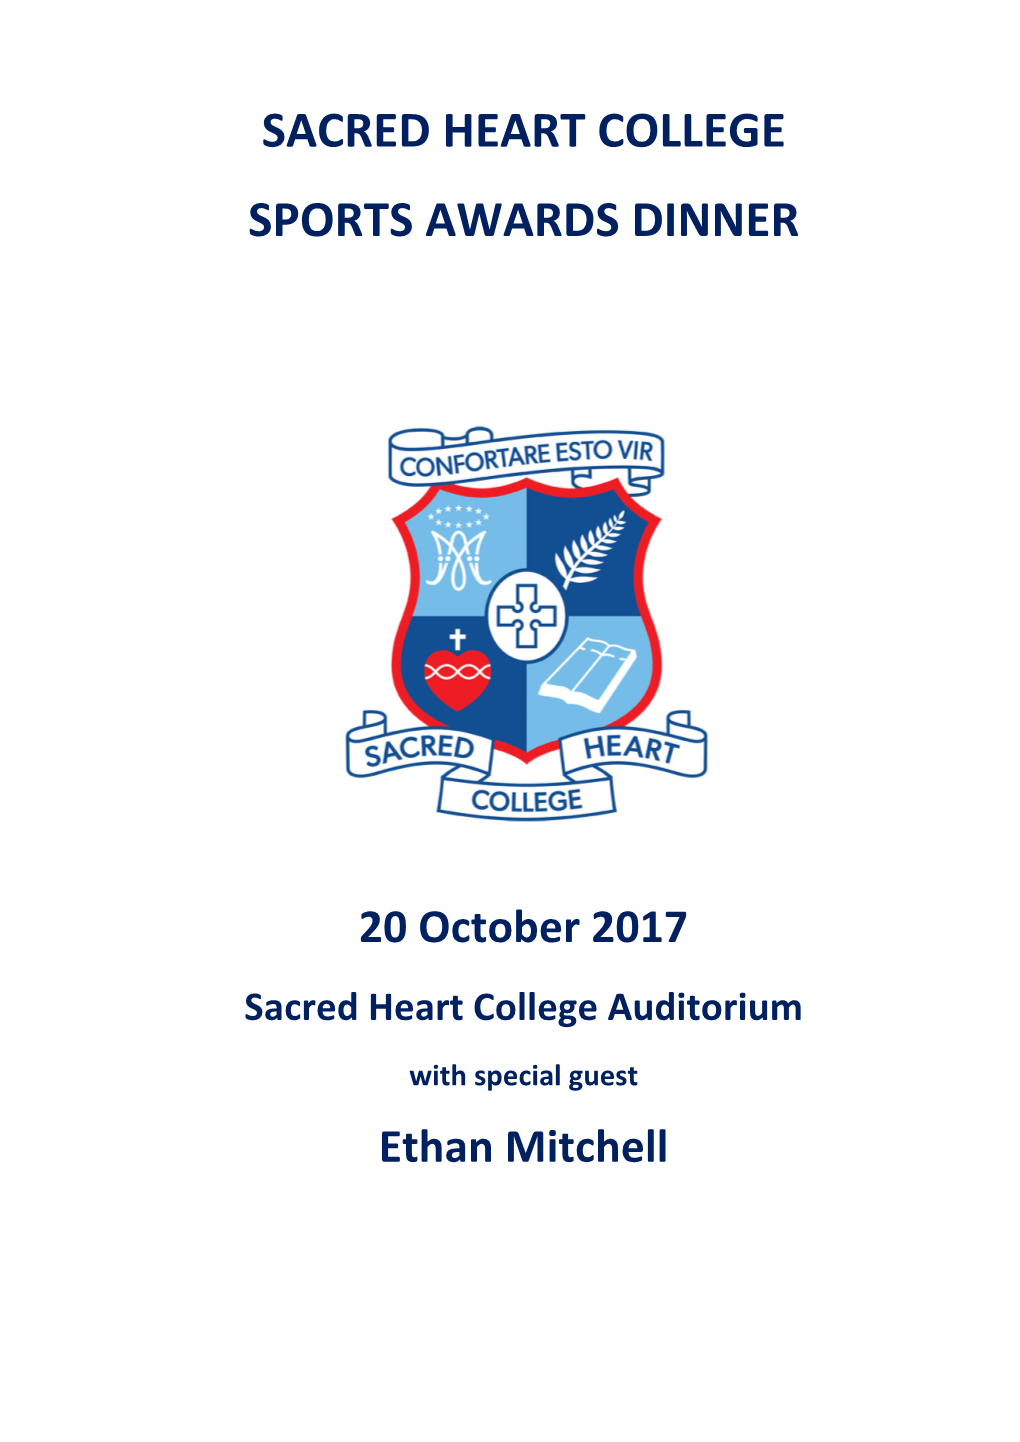 Sacred Heart College Sports Awards Dinner